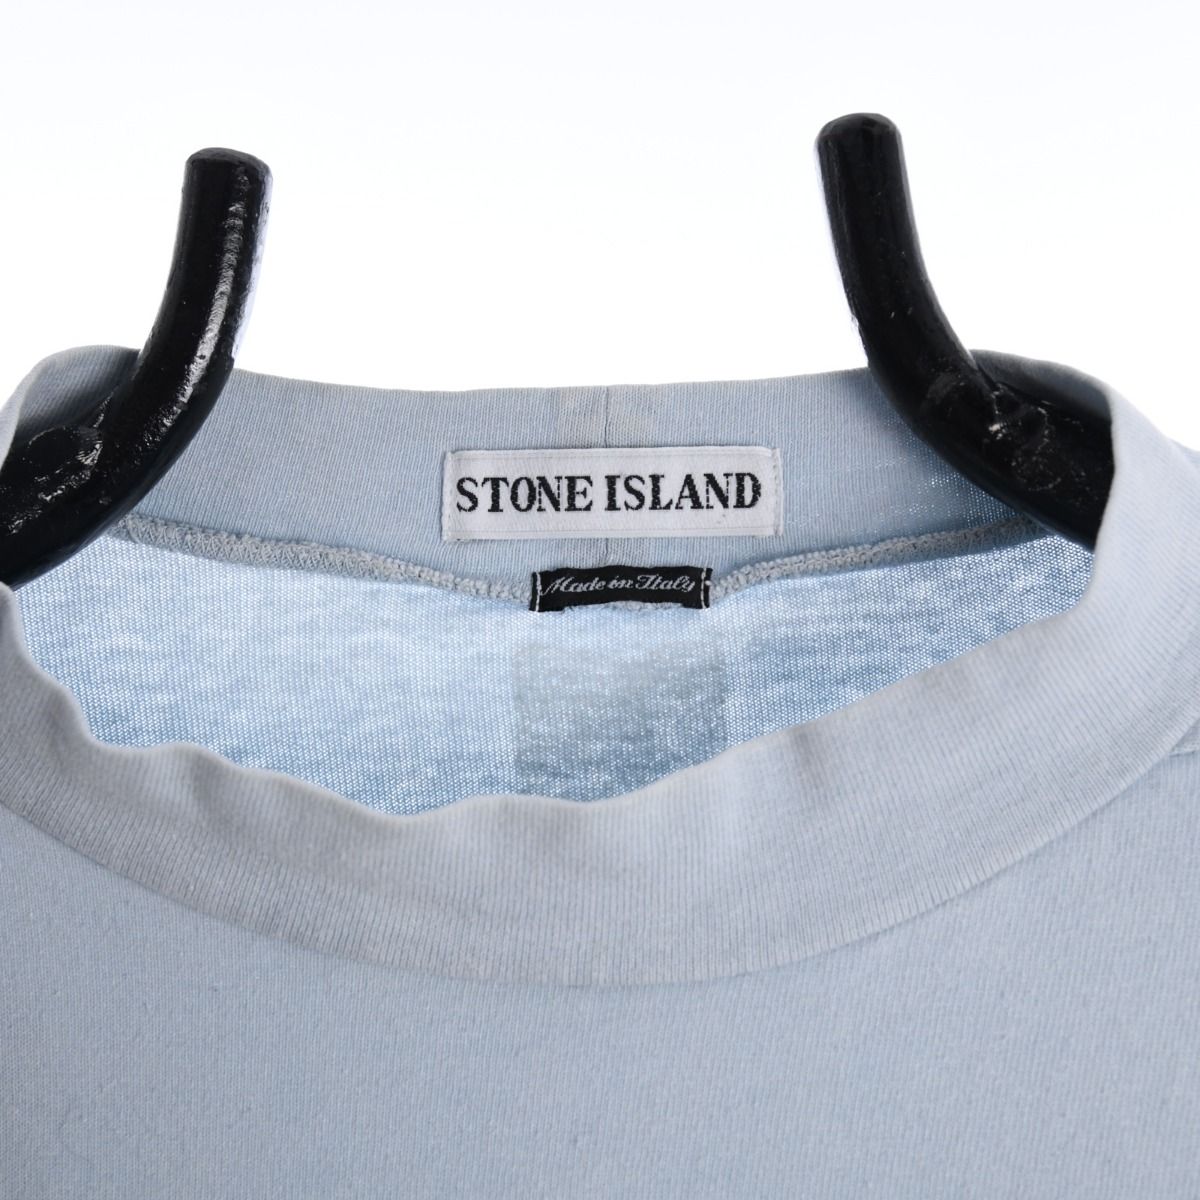 Stone Island S/S 1997 Long Sleeve T-Shirt